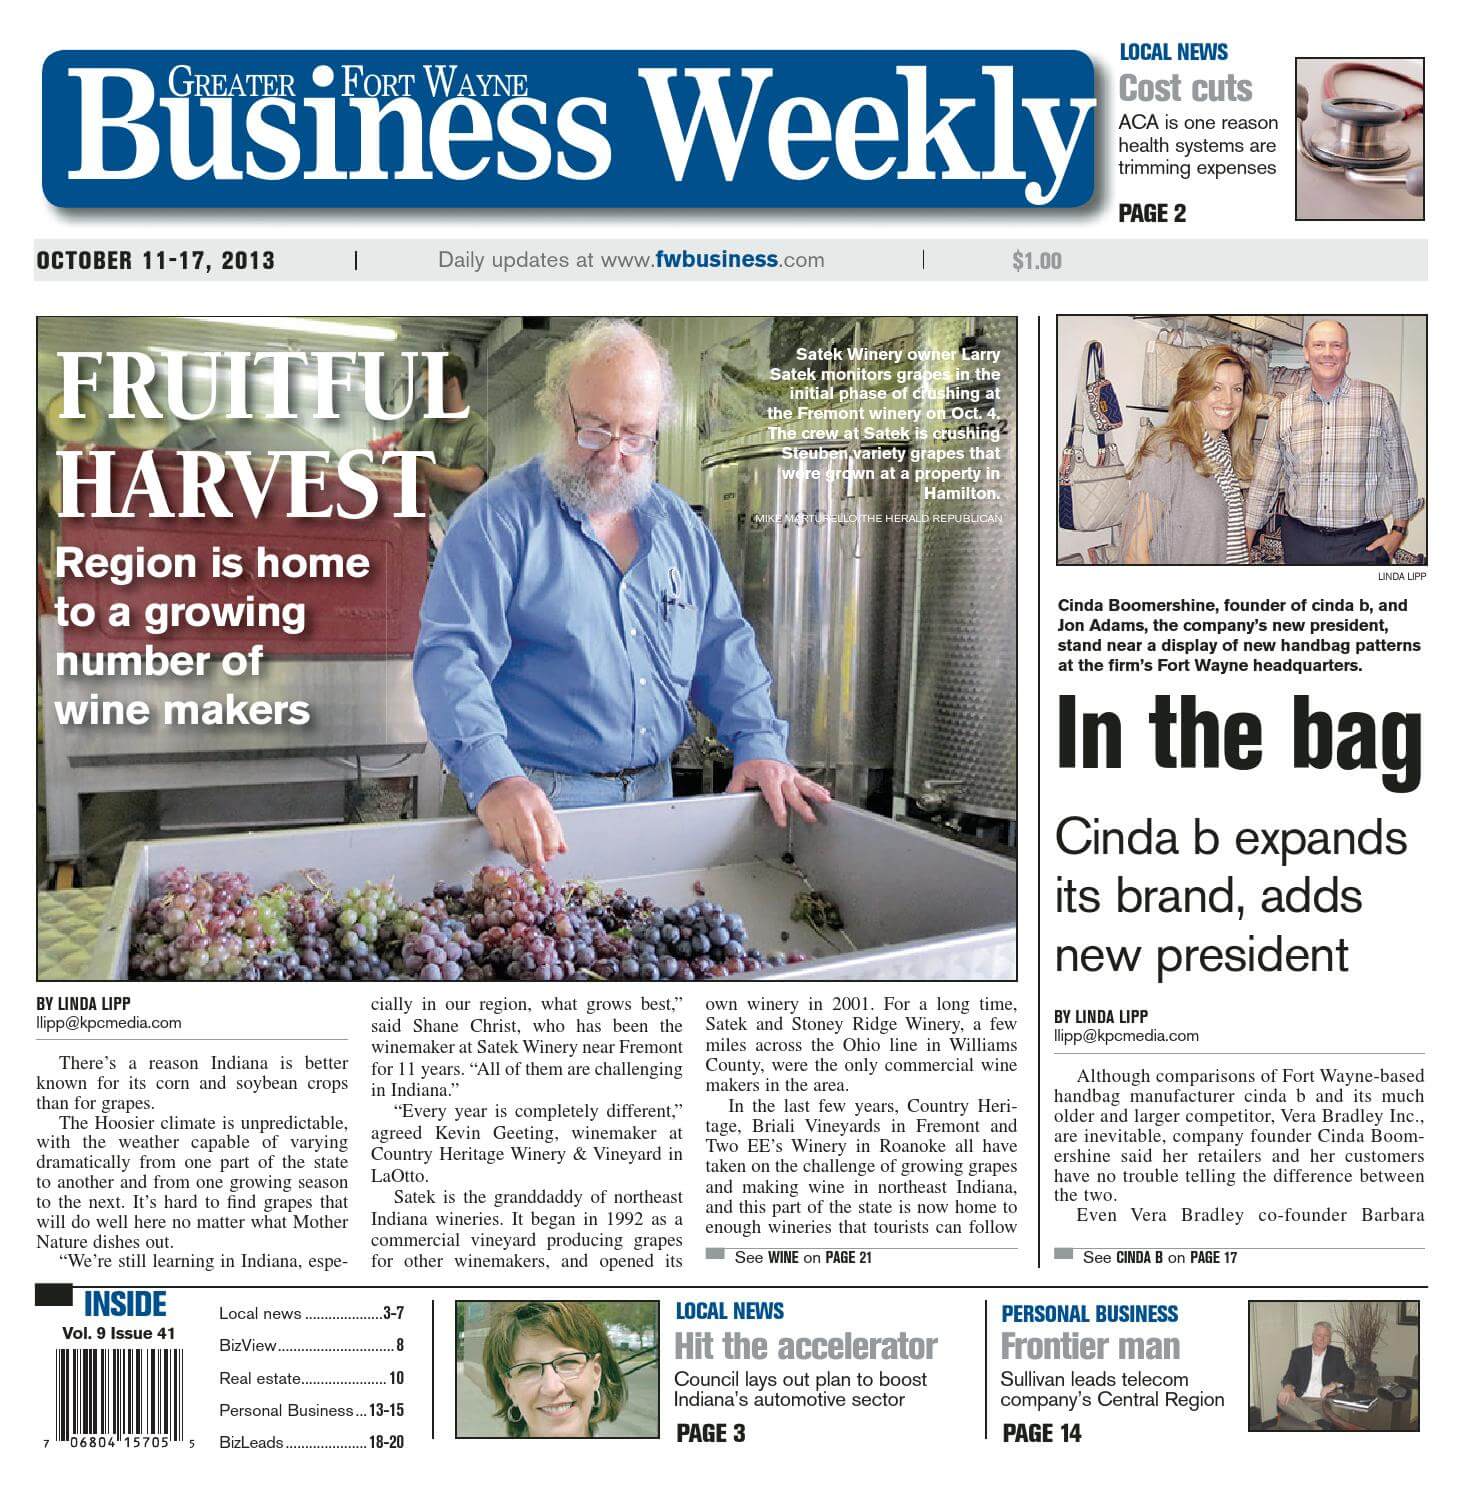 Fort Wayne Newspapers 03 Grater Fort Wayne Business Weekly